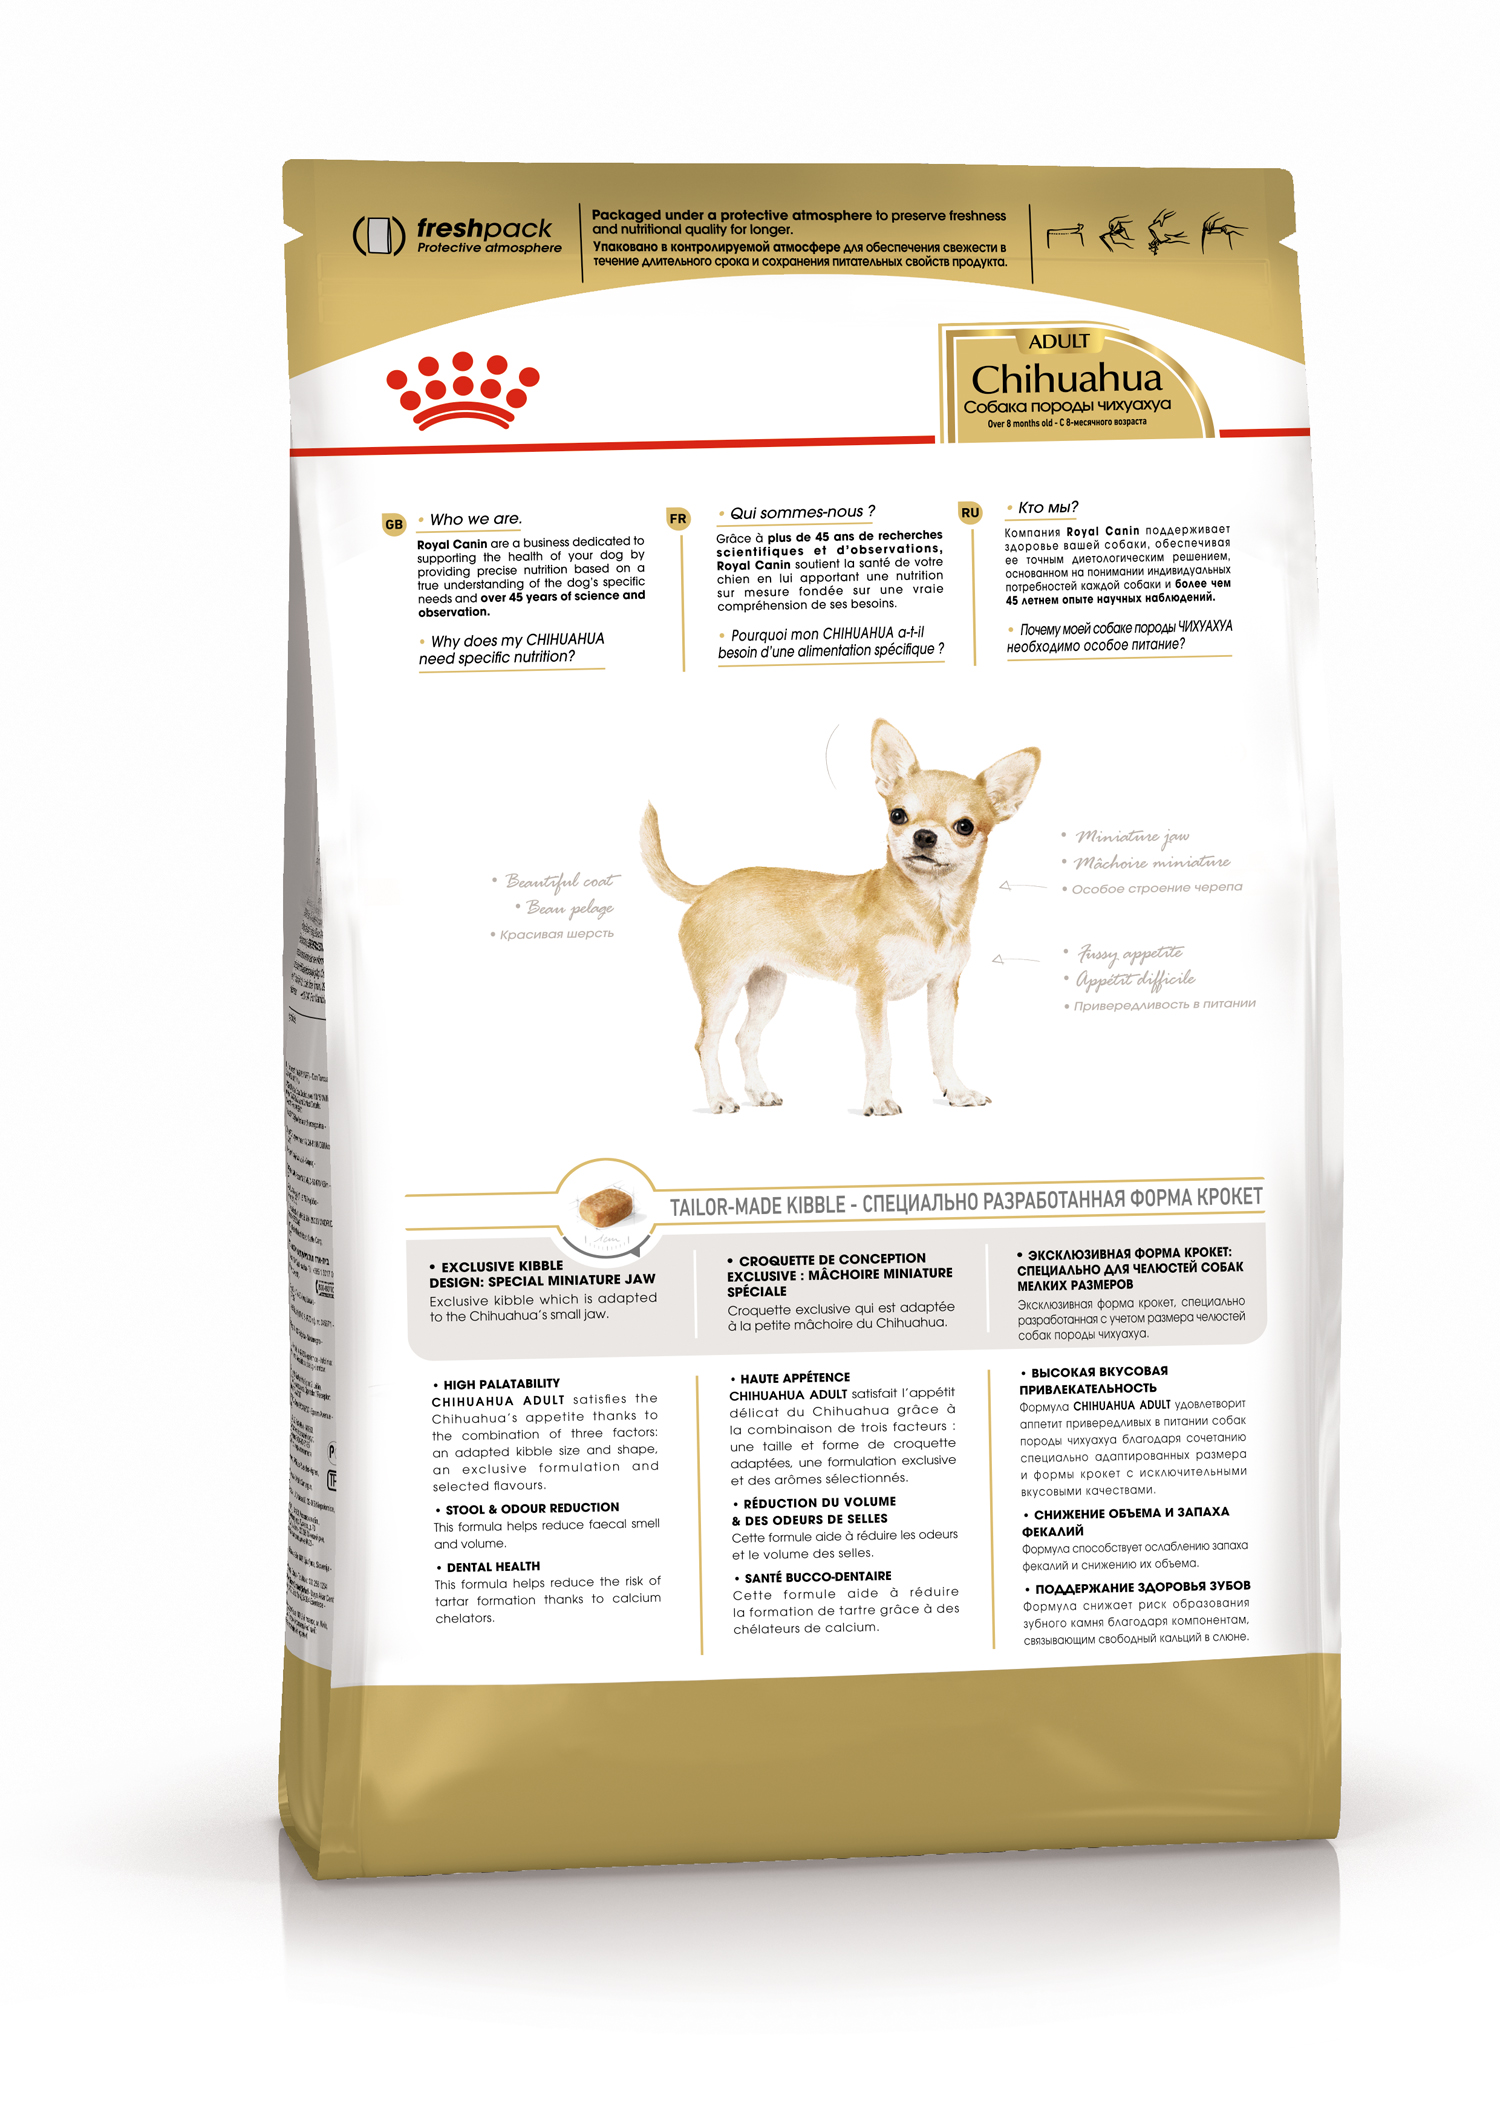 Royal Canin Chihuahua Adult корм сухой для взрослых собак породы Чихуахуа от 8 месяцев